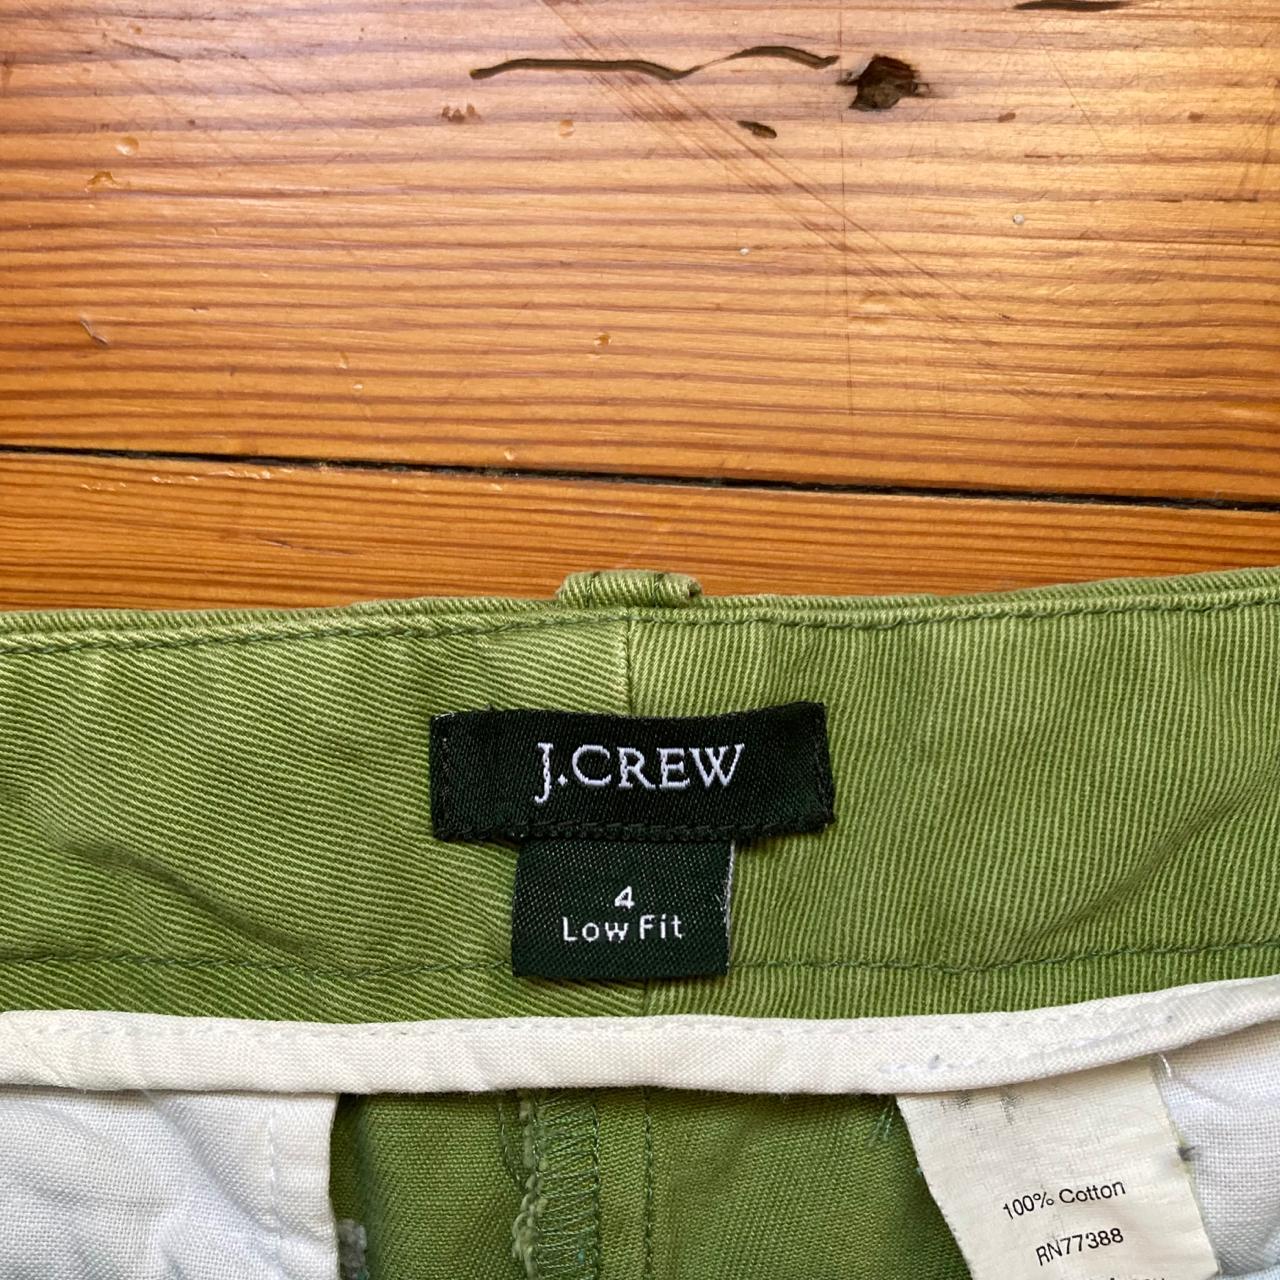 J.Crew Women's Green and Khaki Shorts (4)